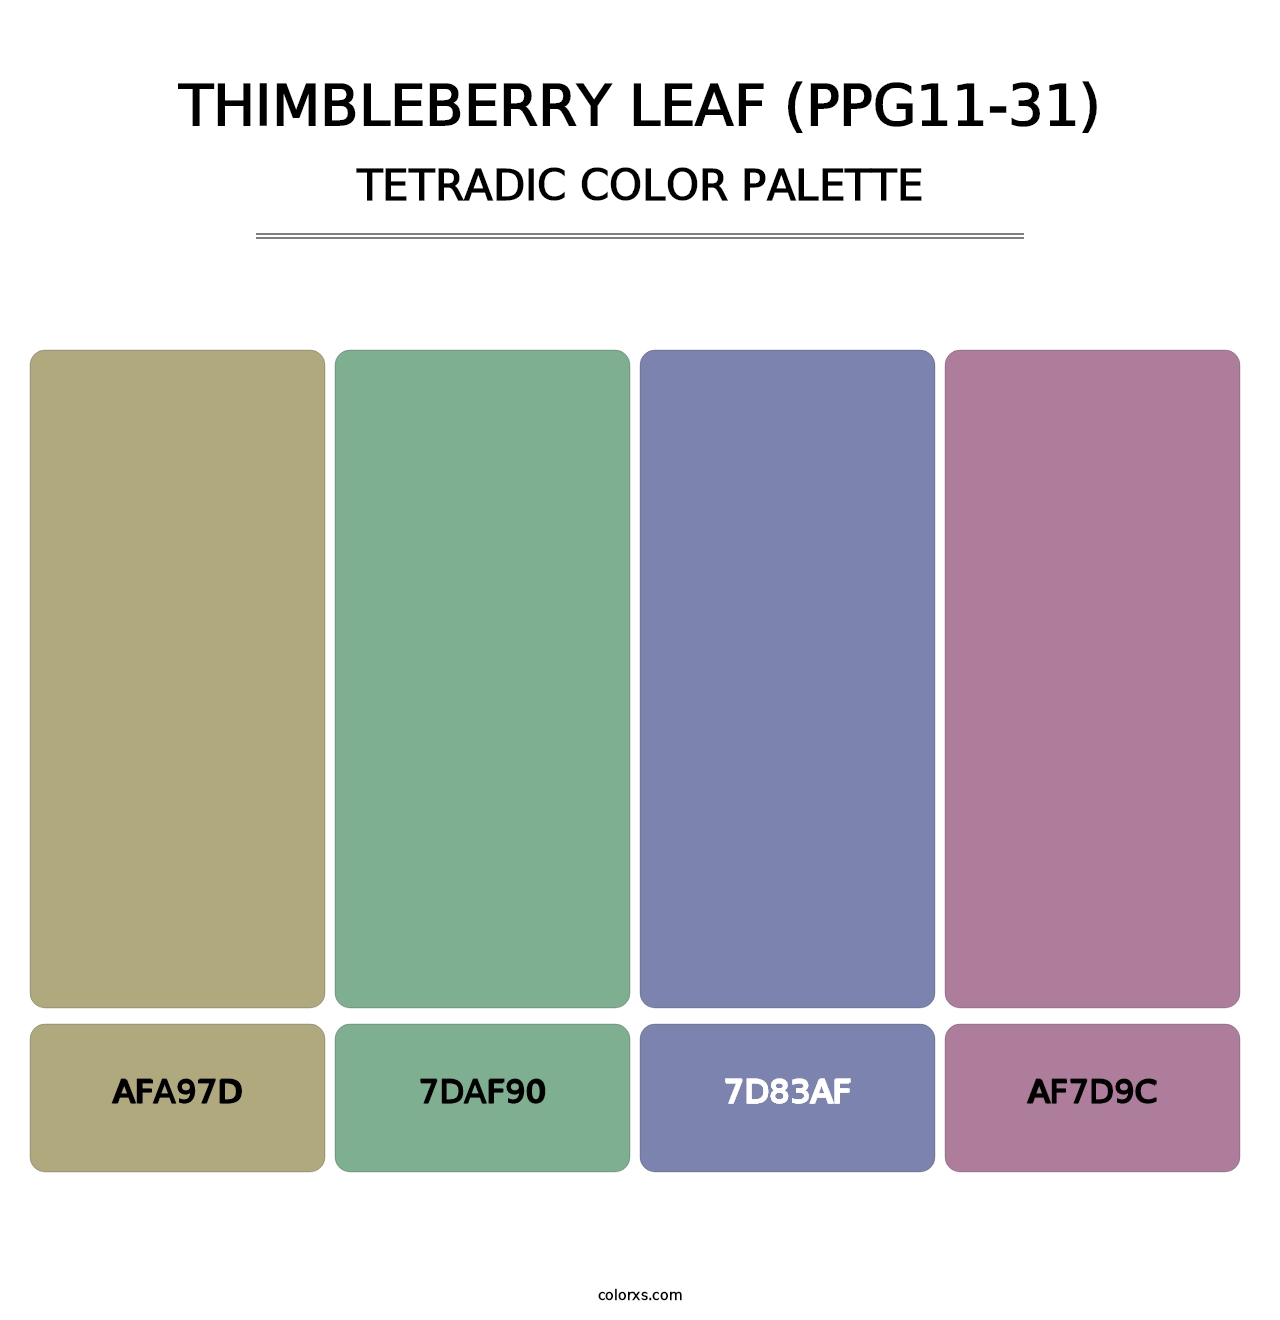 Thimbleberry Leaf (PPG11-31) - Tetradic Color Palette